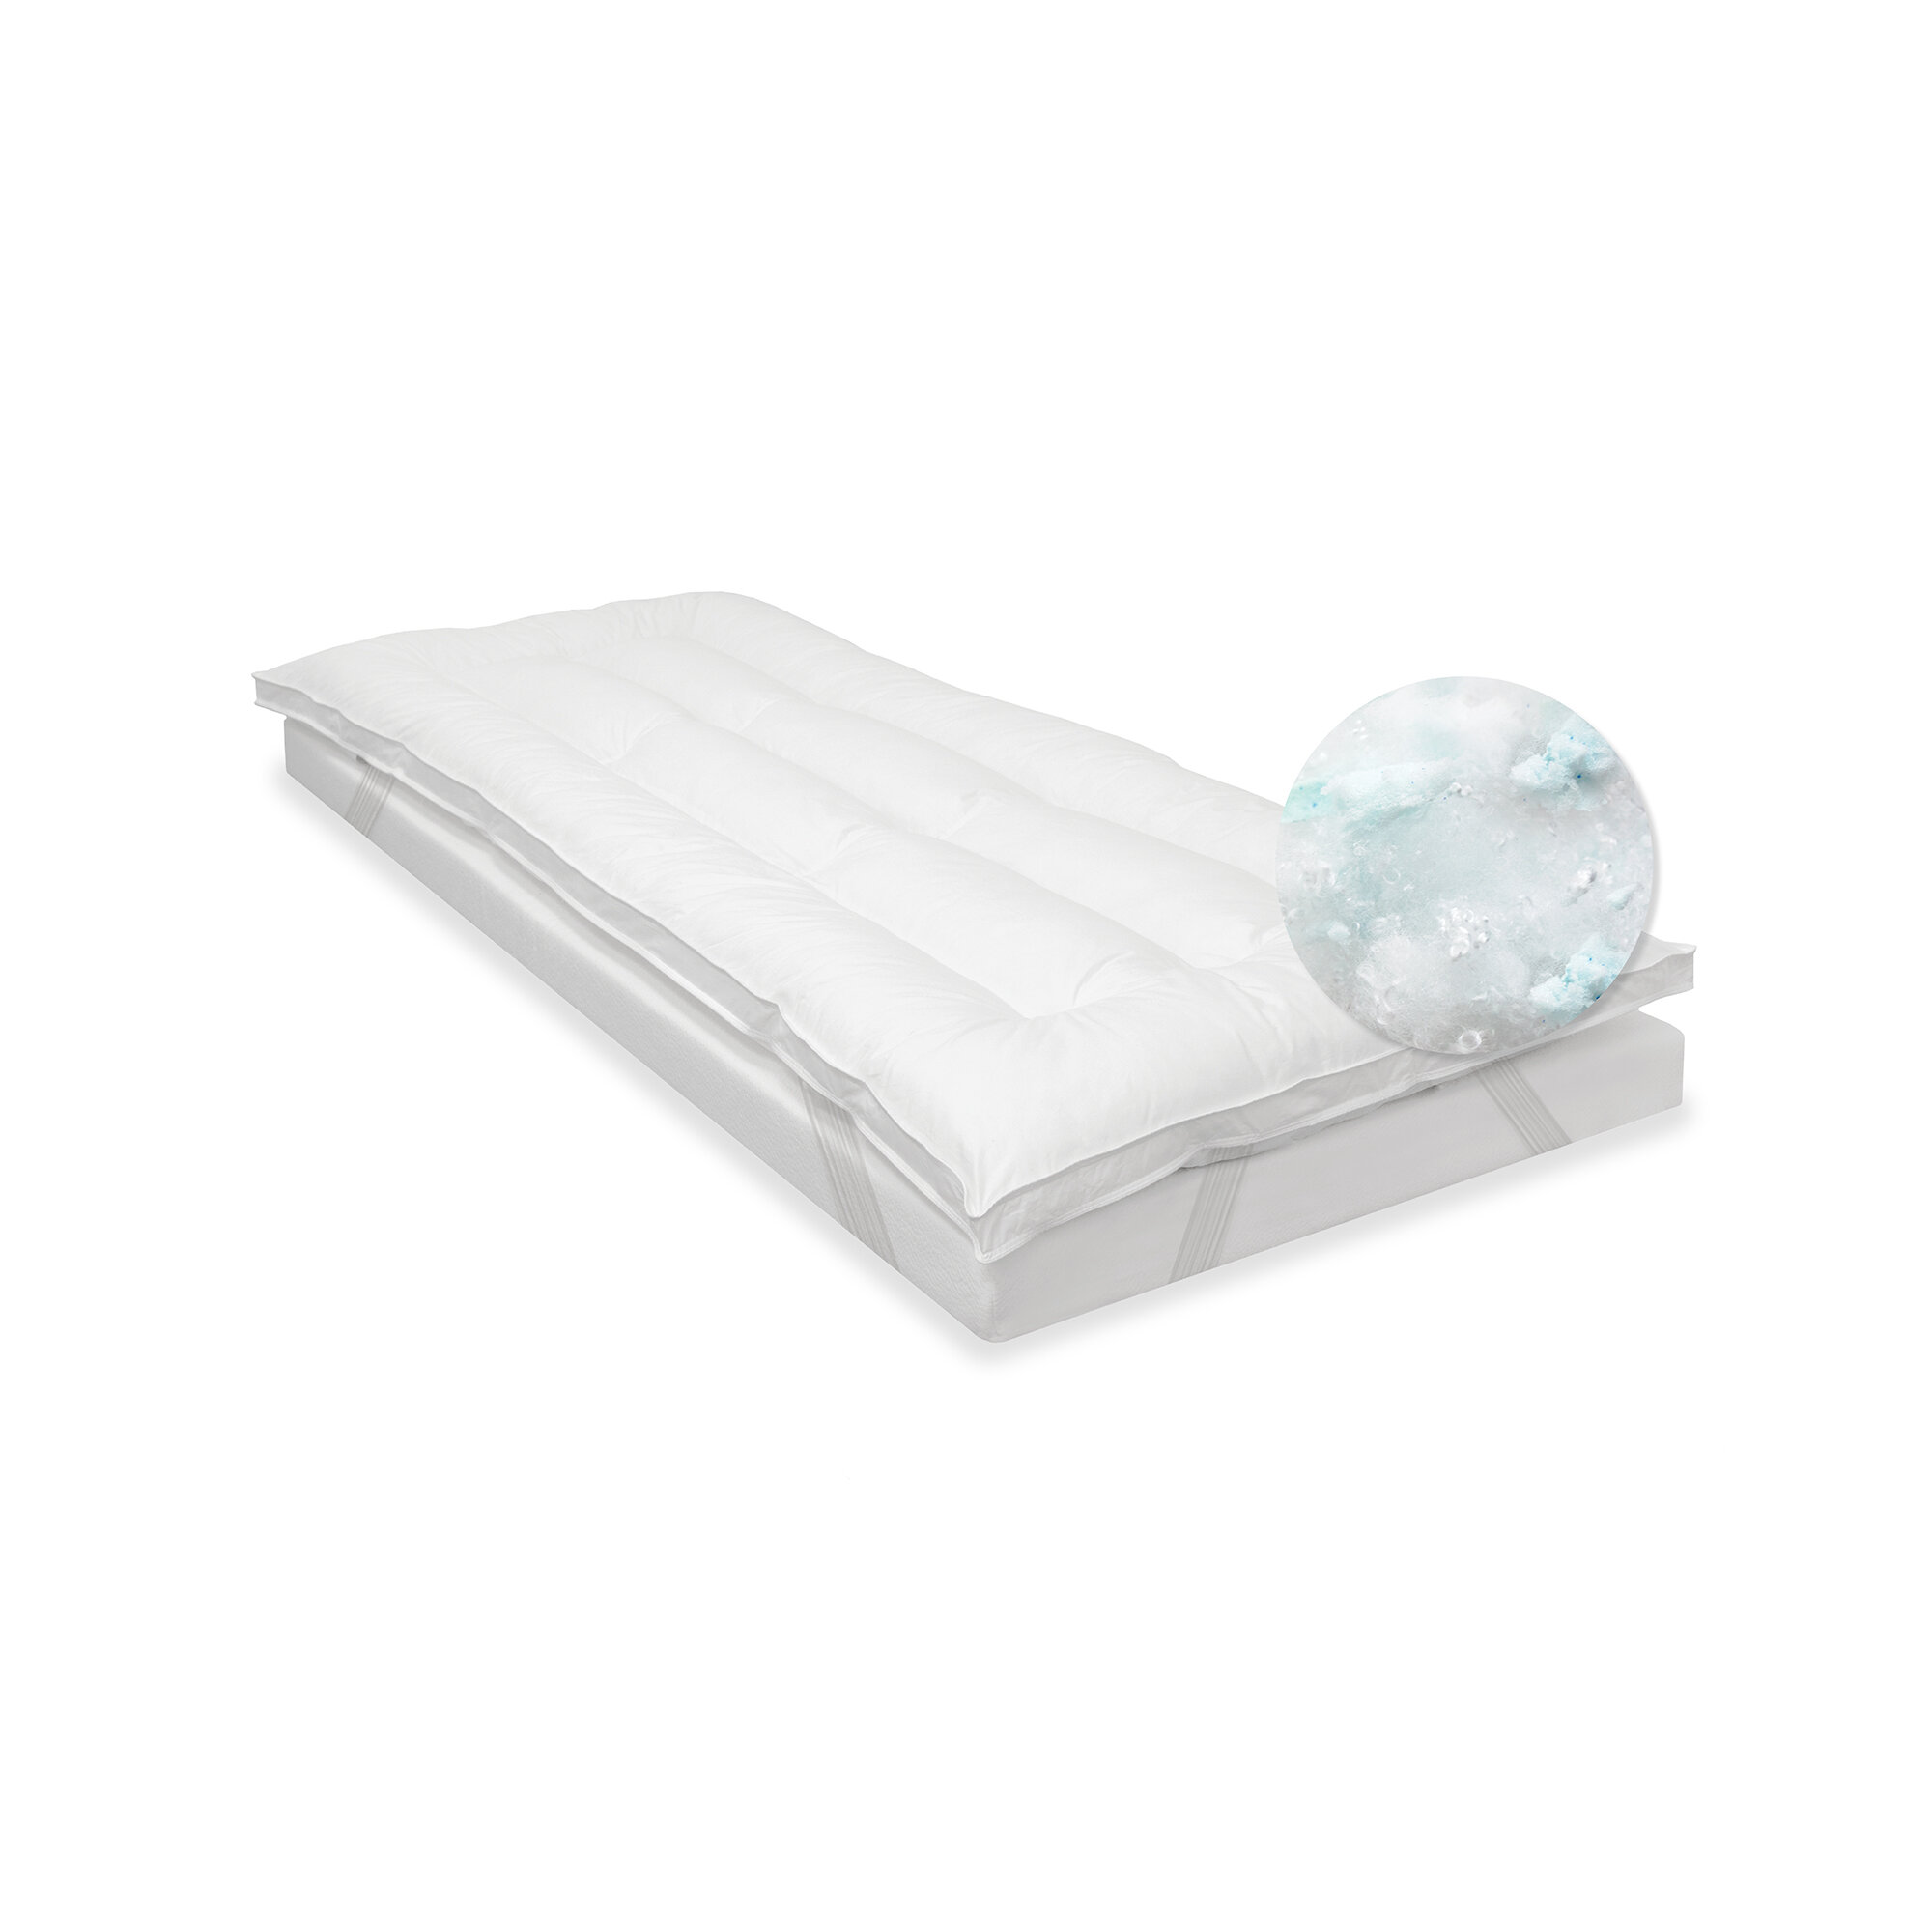 cot size memory foam mattress topper